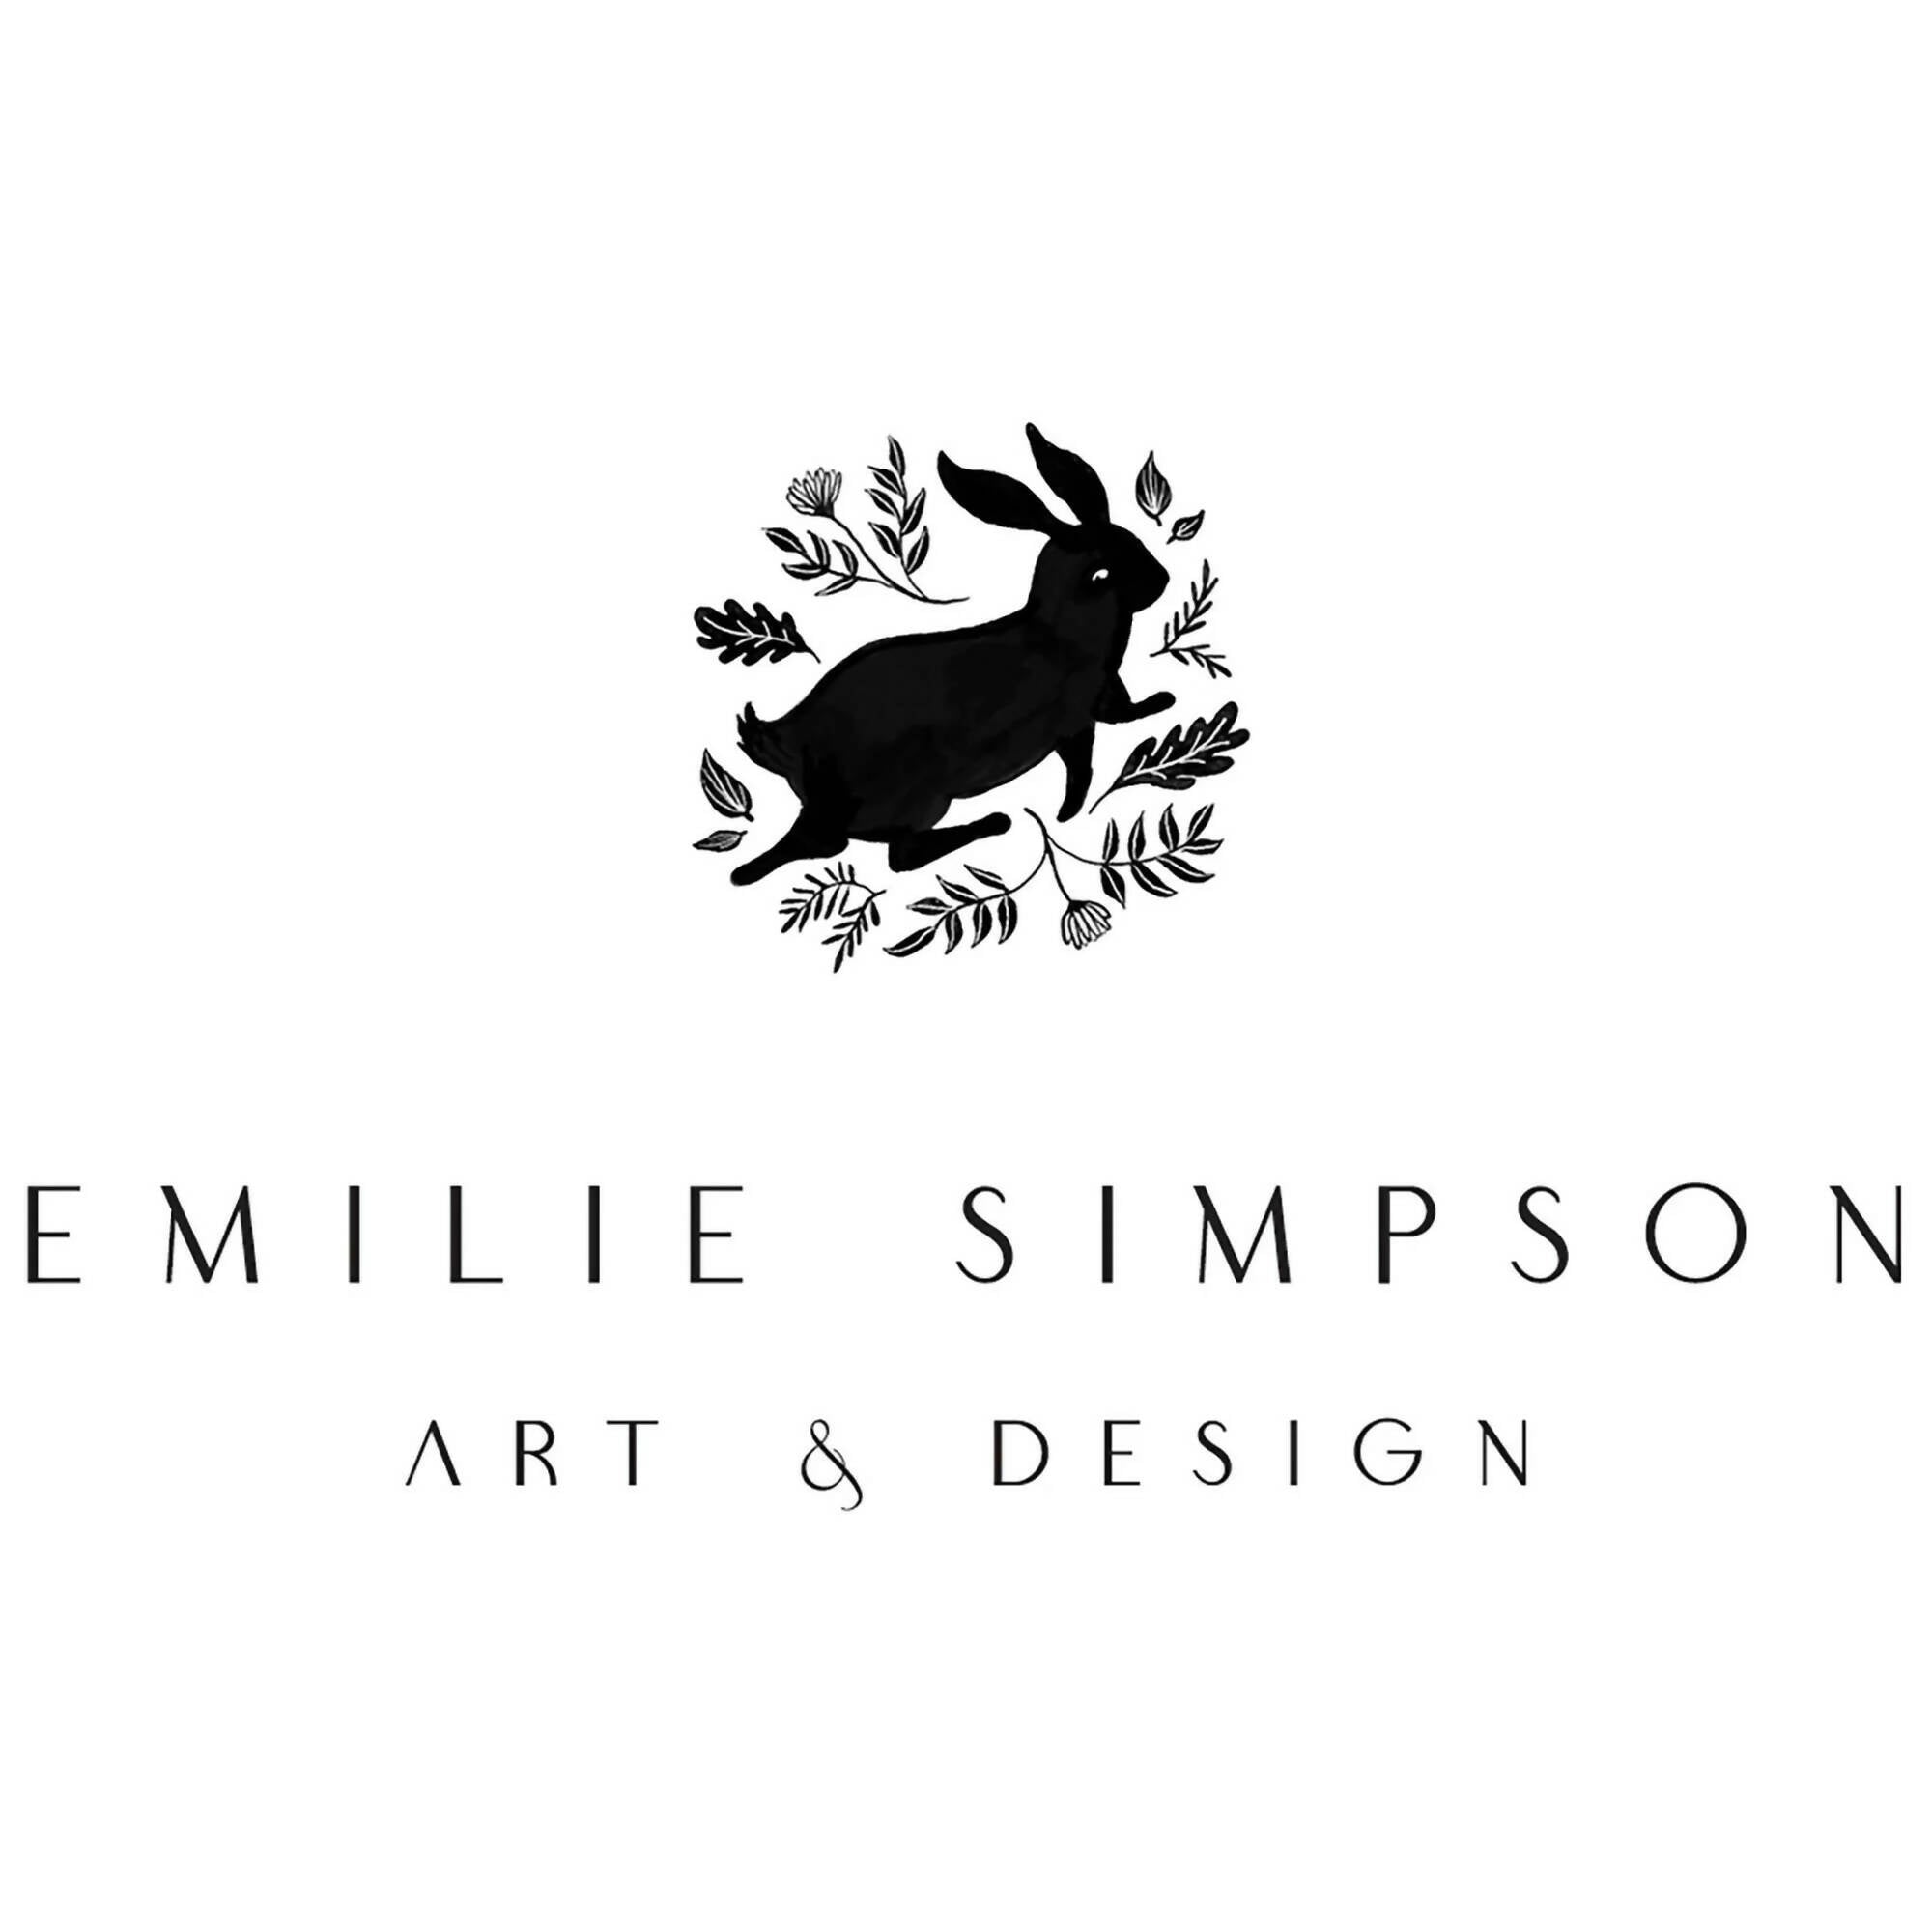 Emilie Simpson Art and Design | Swift Fox Art Original